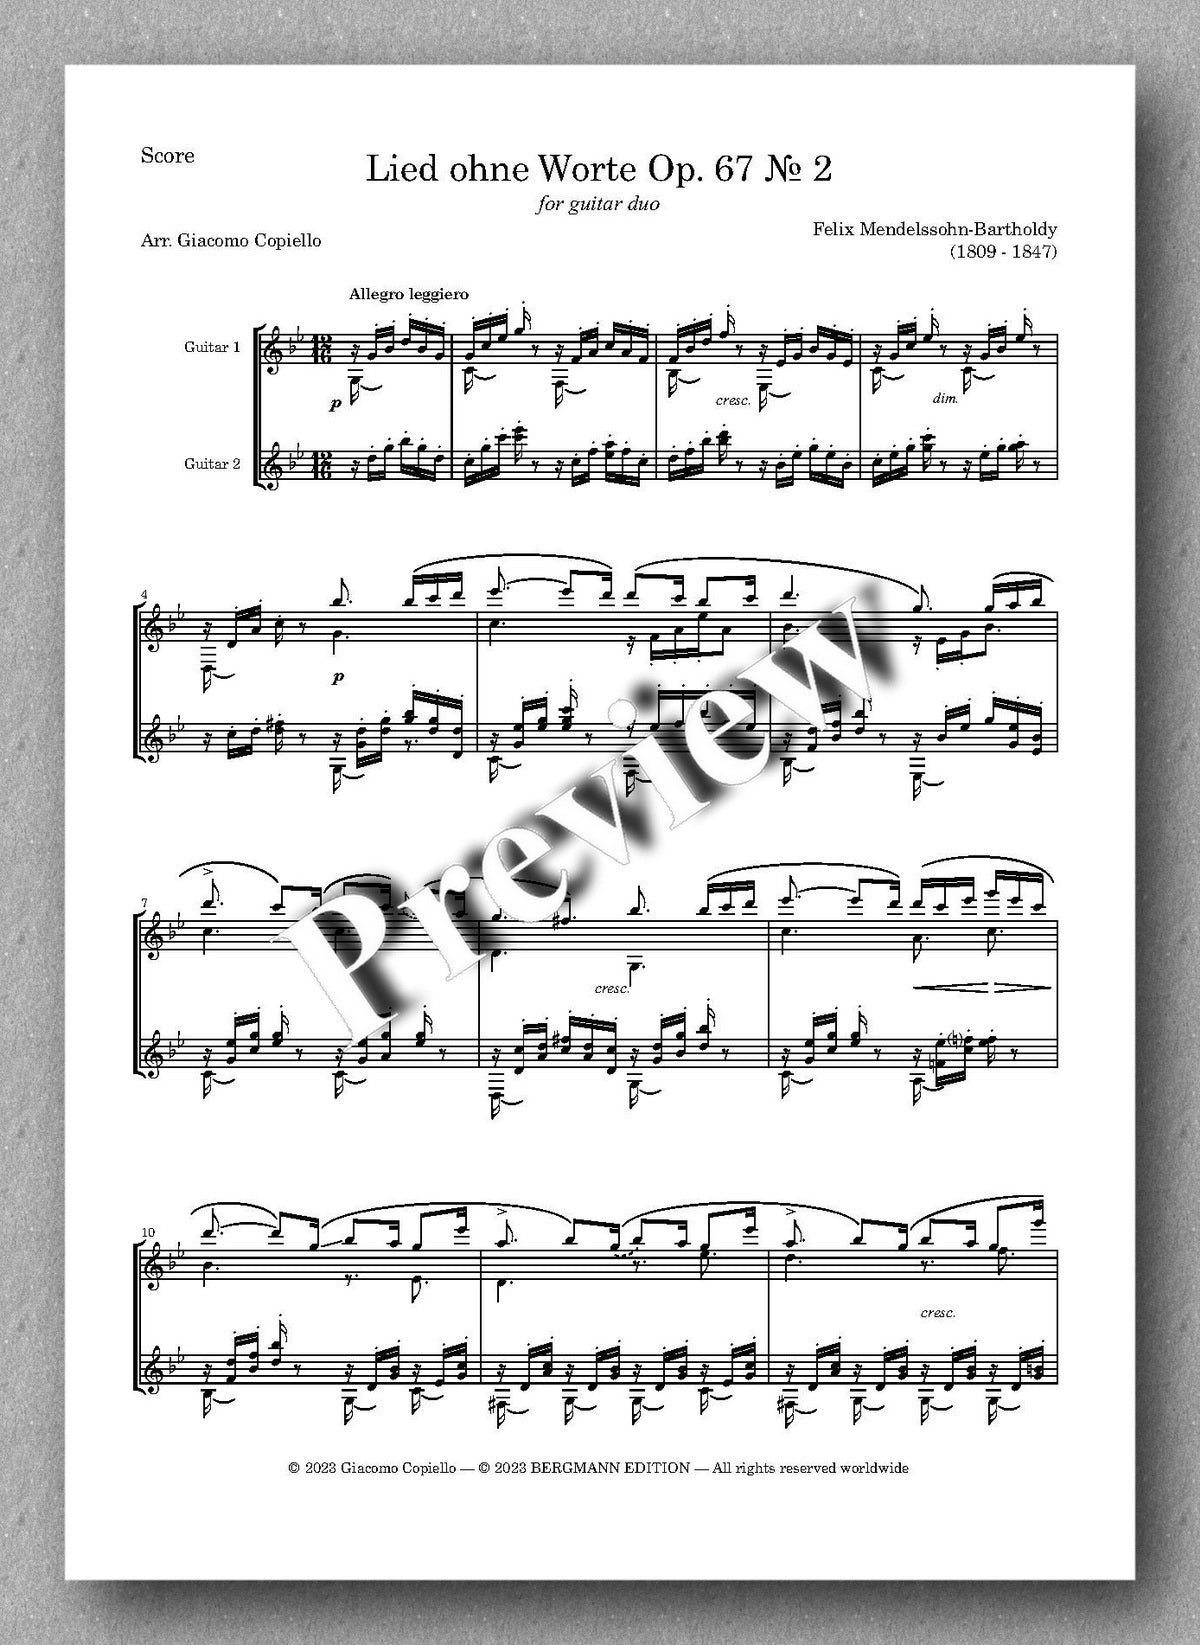 Lieder vol. 4, by Felix Mendelssohn - preview of the music score 1